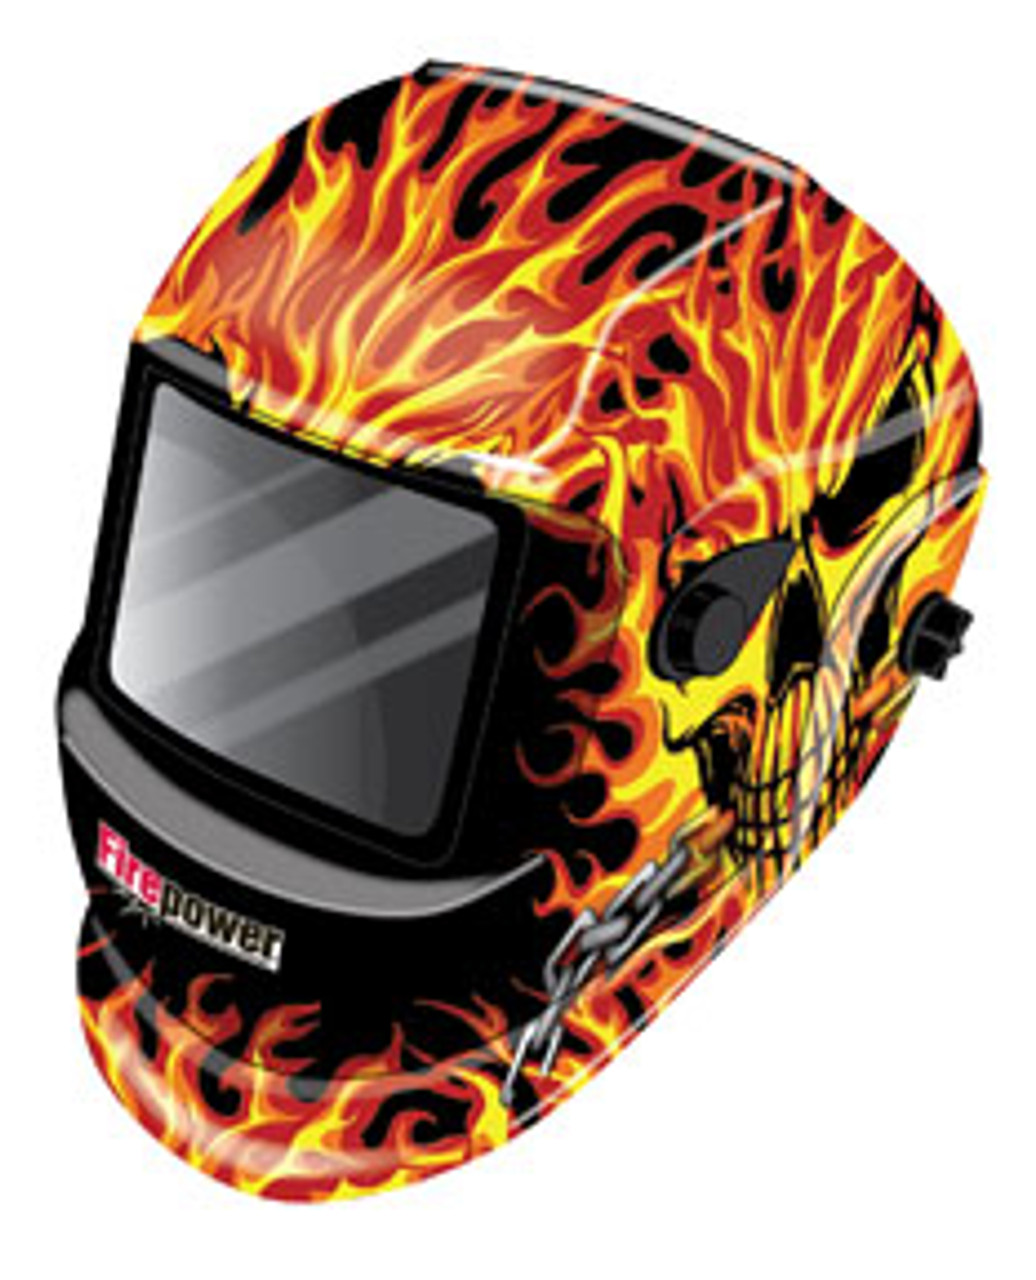 Firepower Skull and Fire Auto-Darkening Welding Helmet